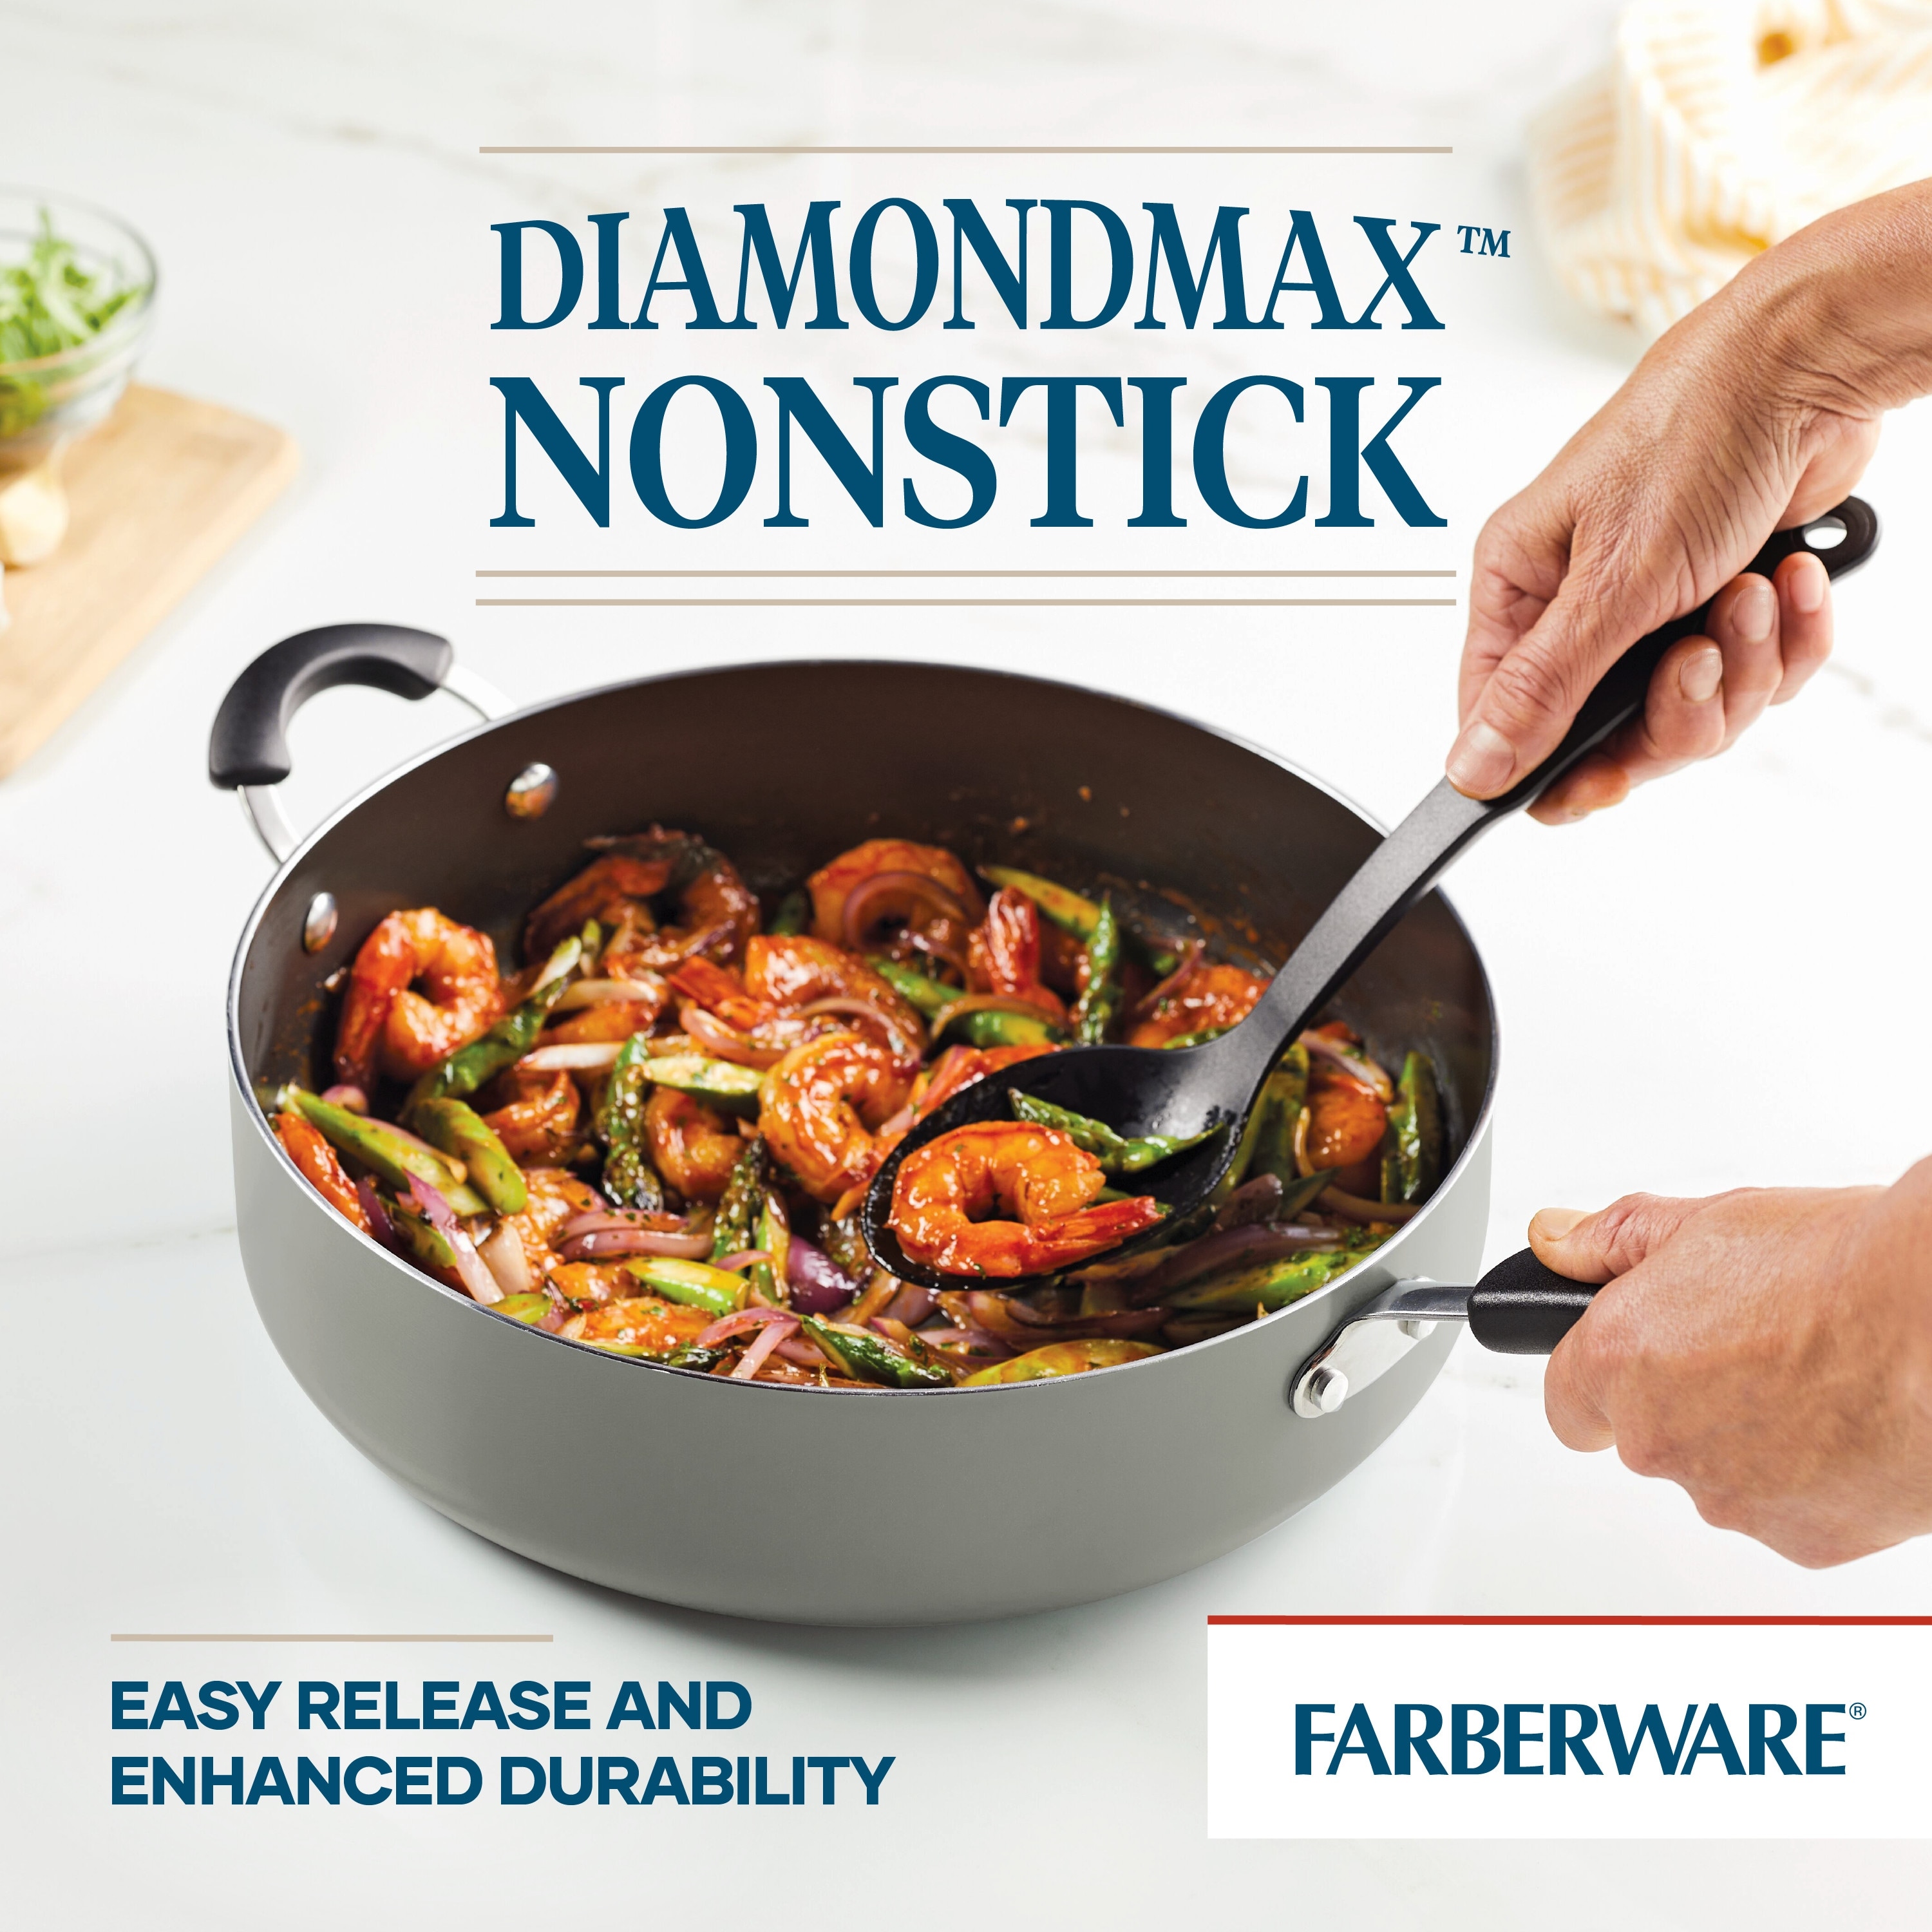 Farberware 15-Piece Cookstart Aluminum DiamondMax Nonstick Cookware Set - Copper